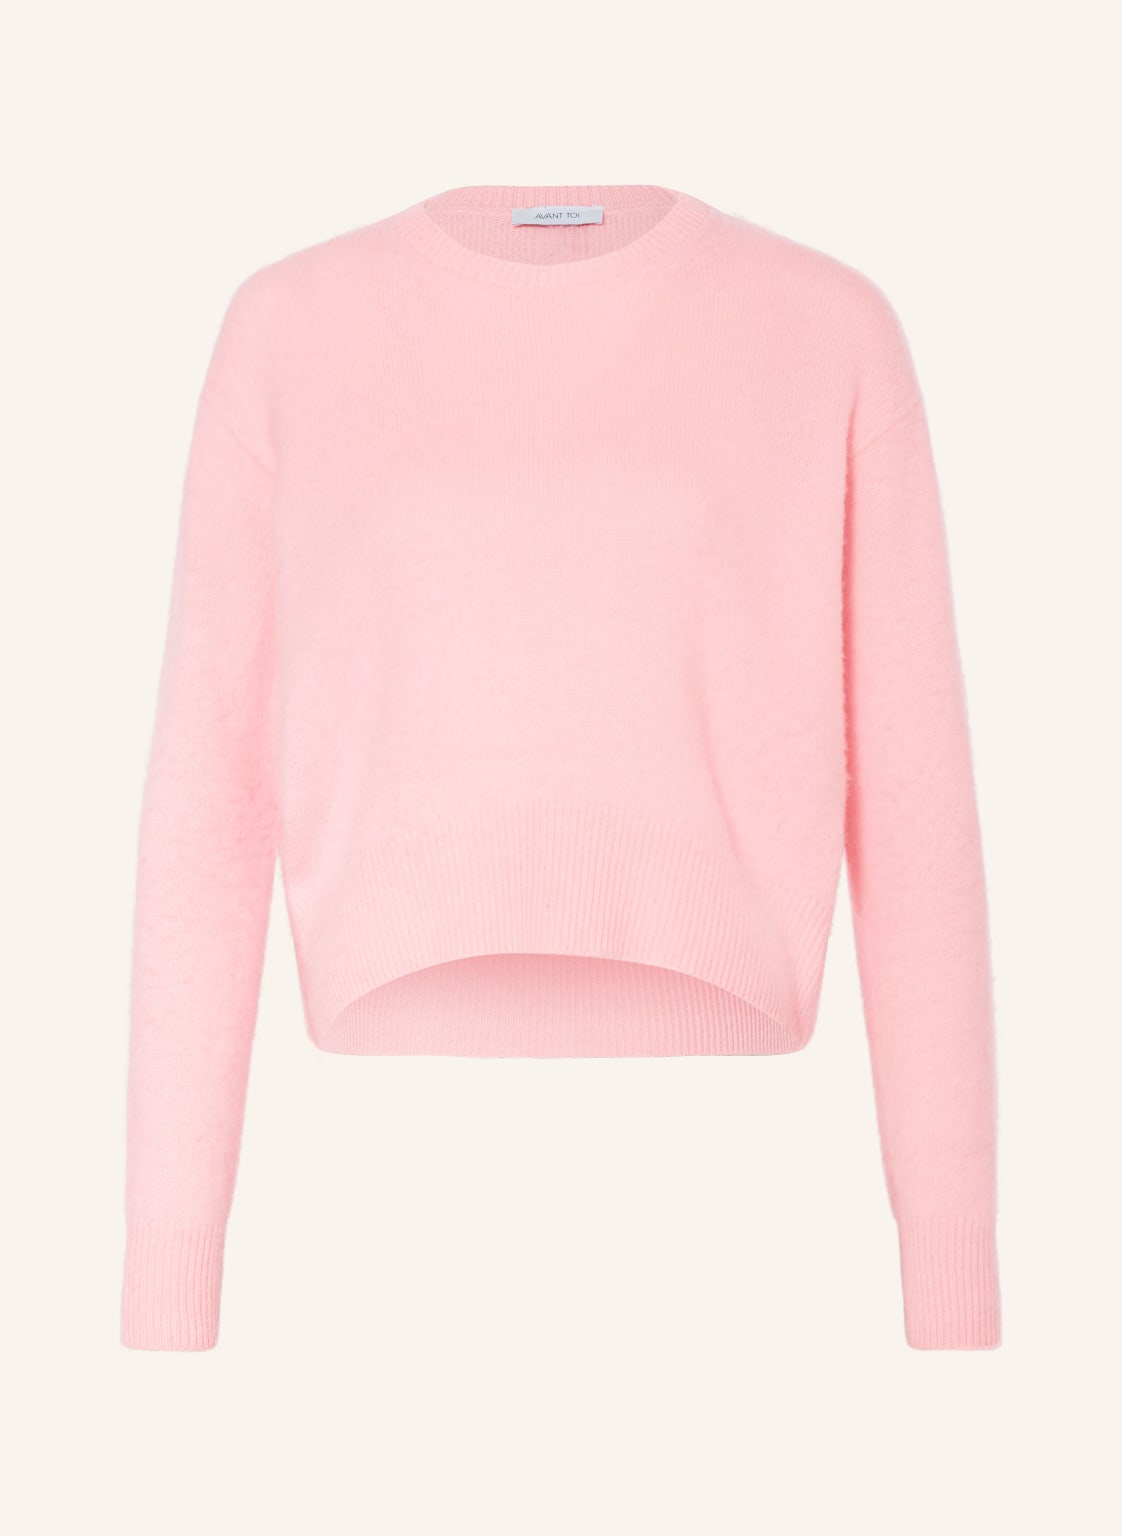 Avant Toi Cashmere-Pullover rosa von AVANT TOI